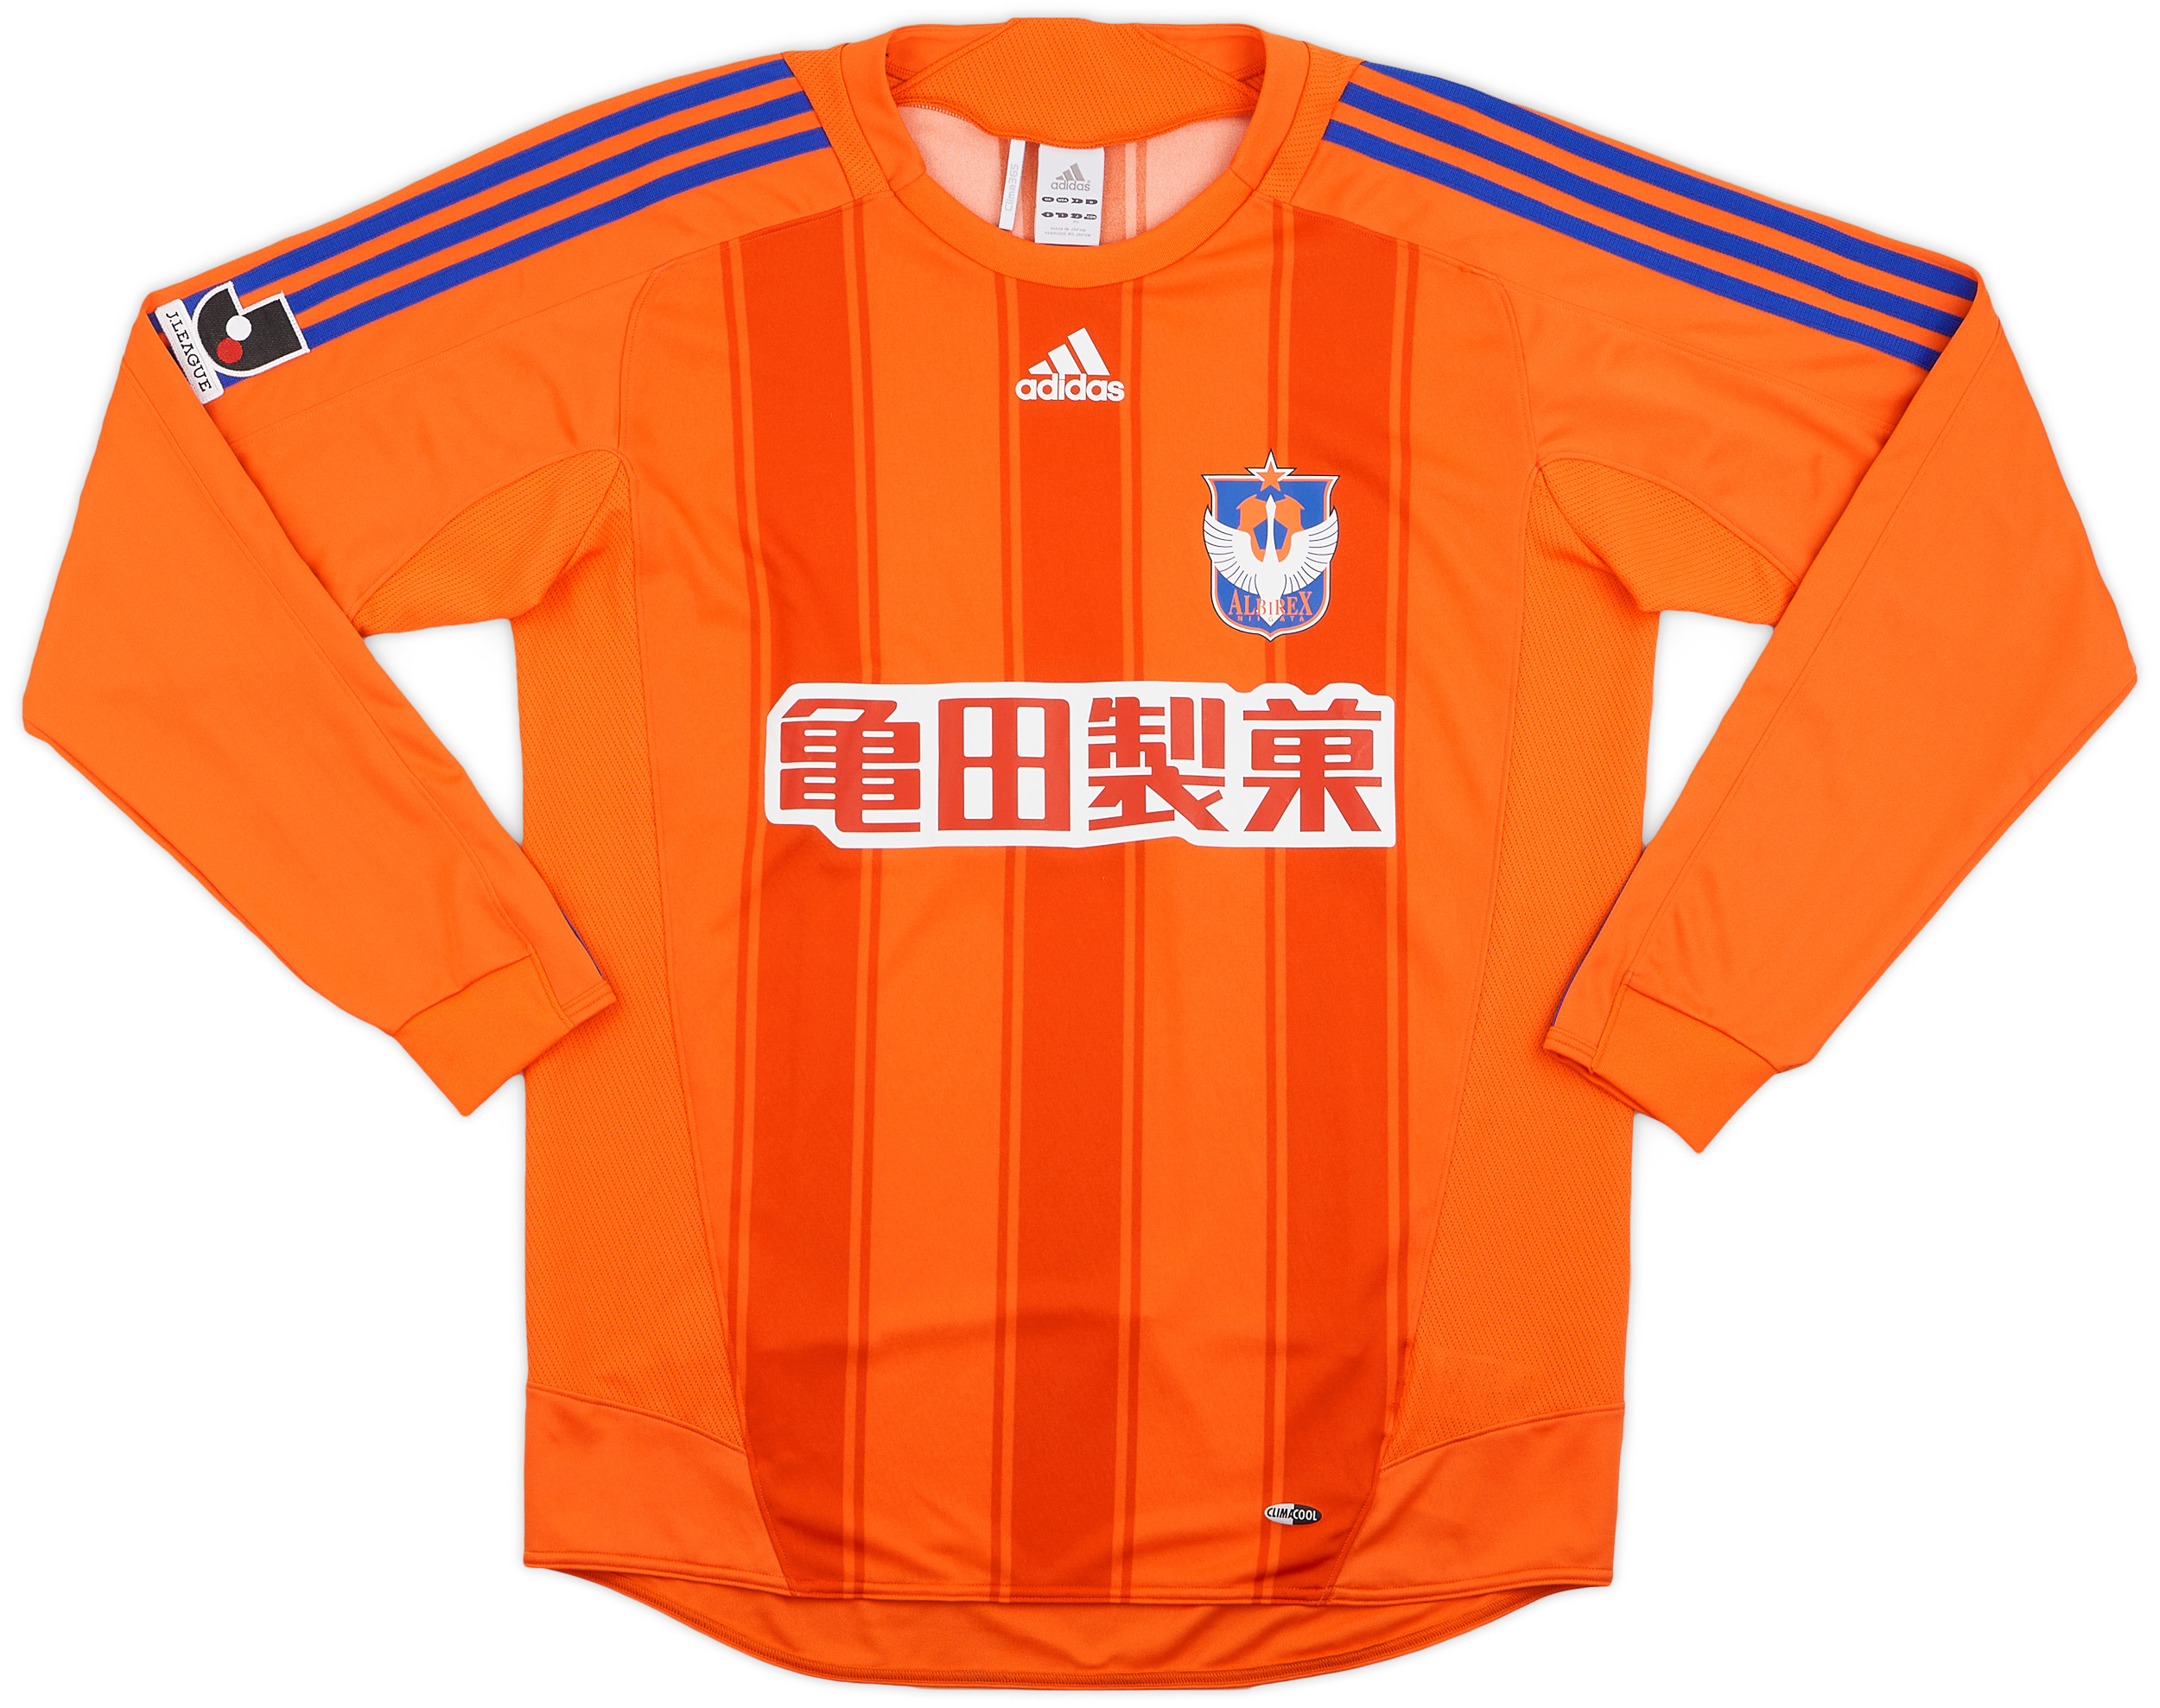  Albirex Niigata  home shirt (Original)